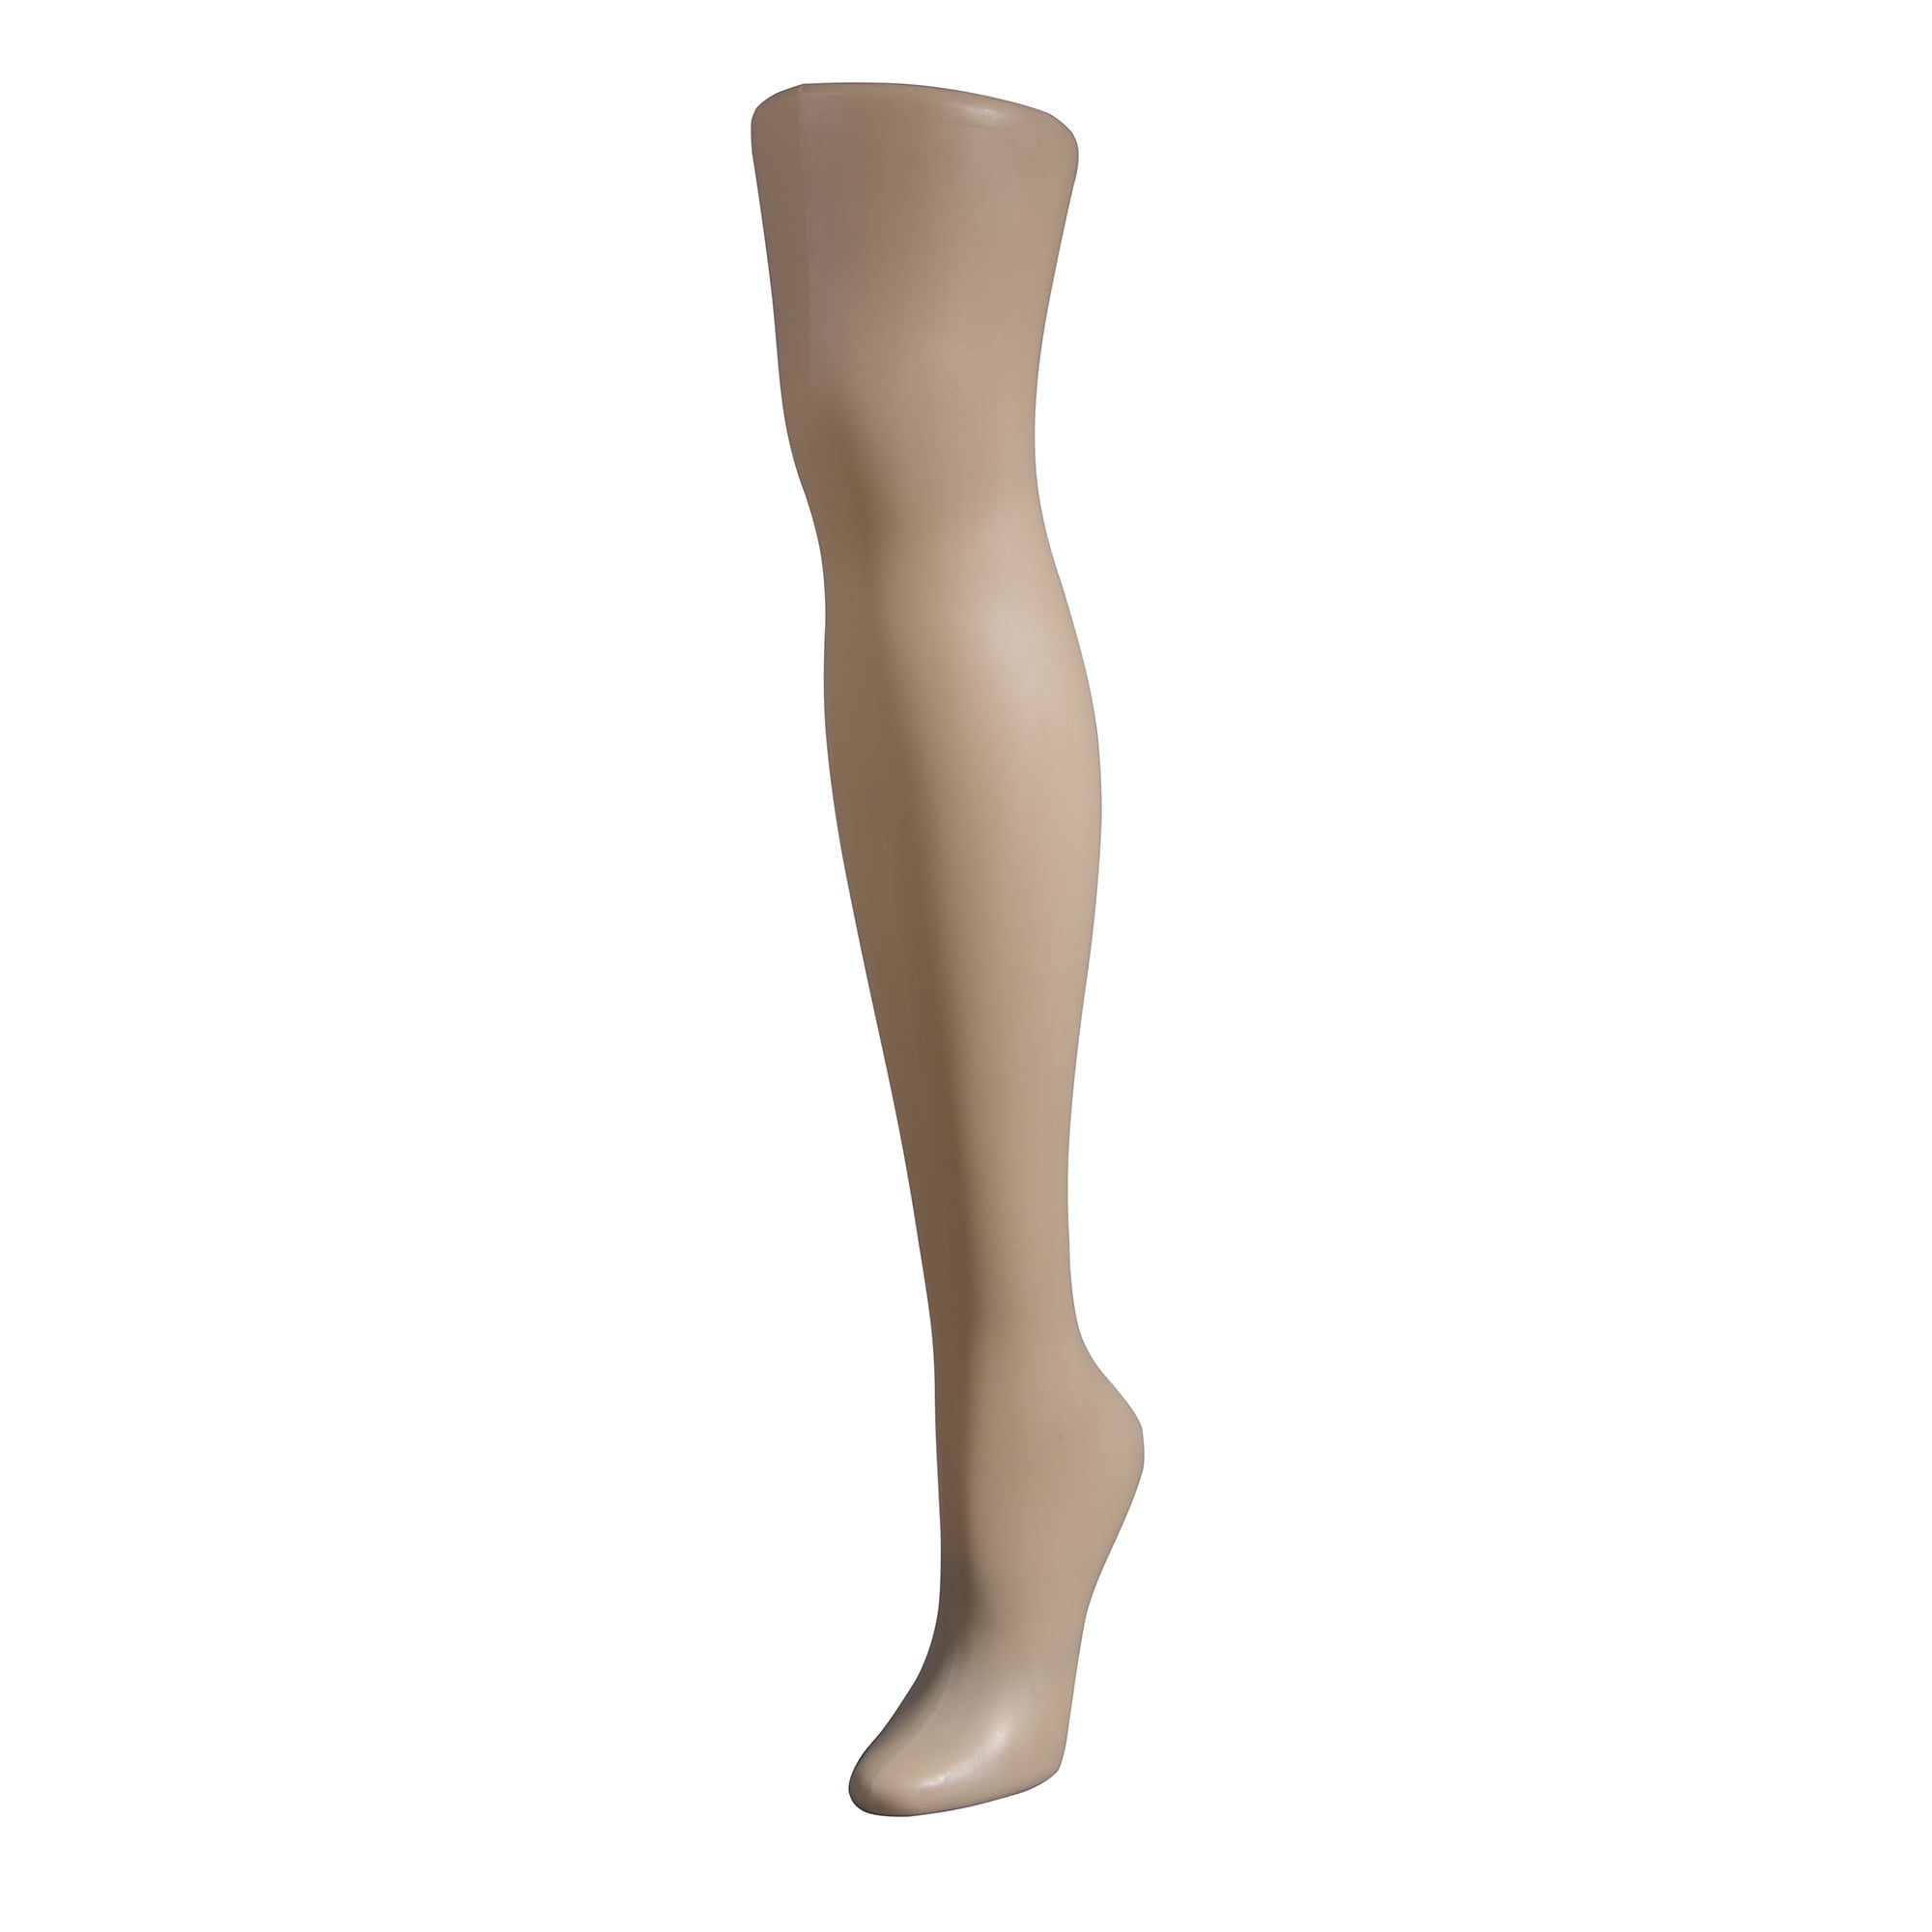 display manikin legs,Plastic leg,1 clear leg 1 Female mannequin mannequin legs 